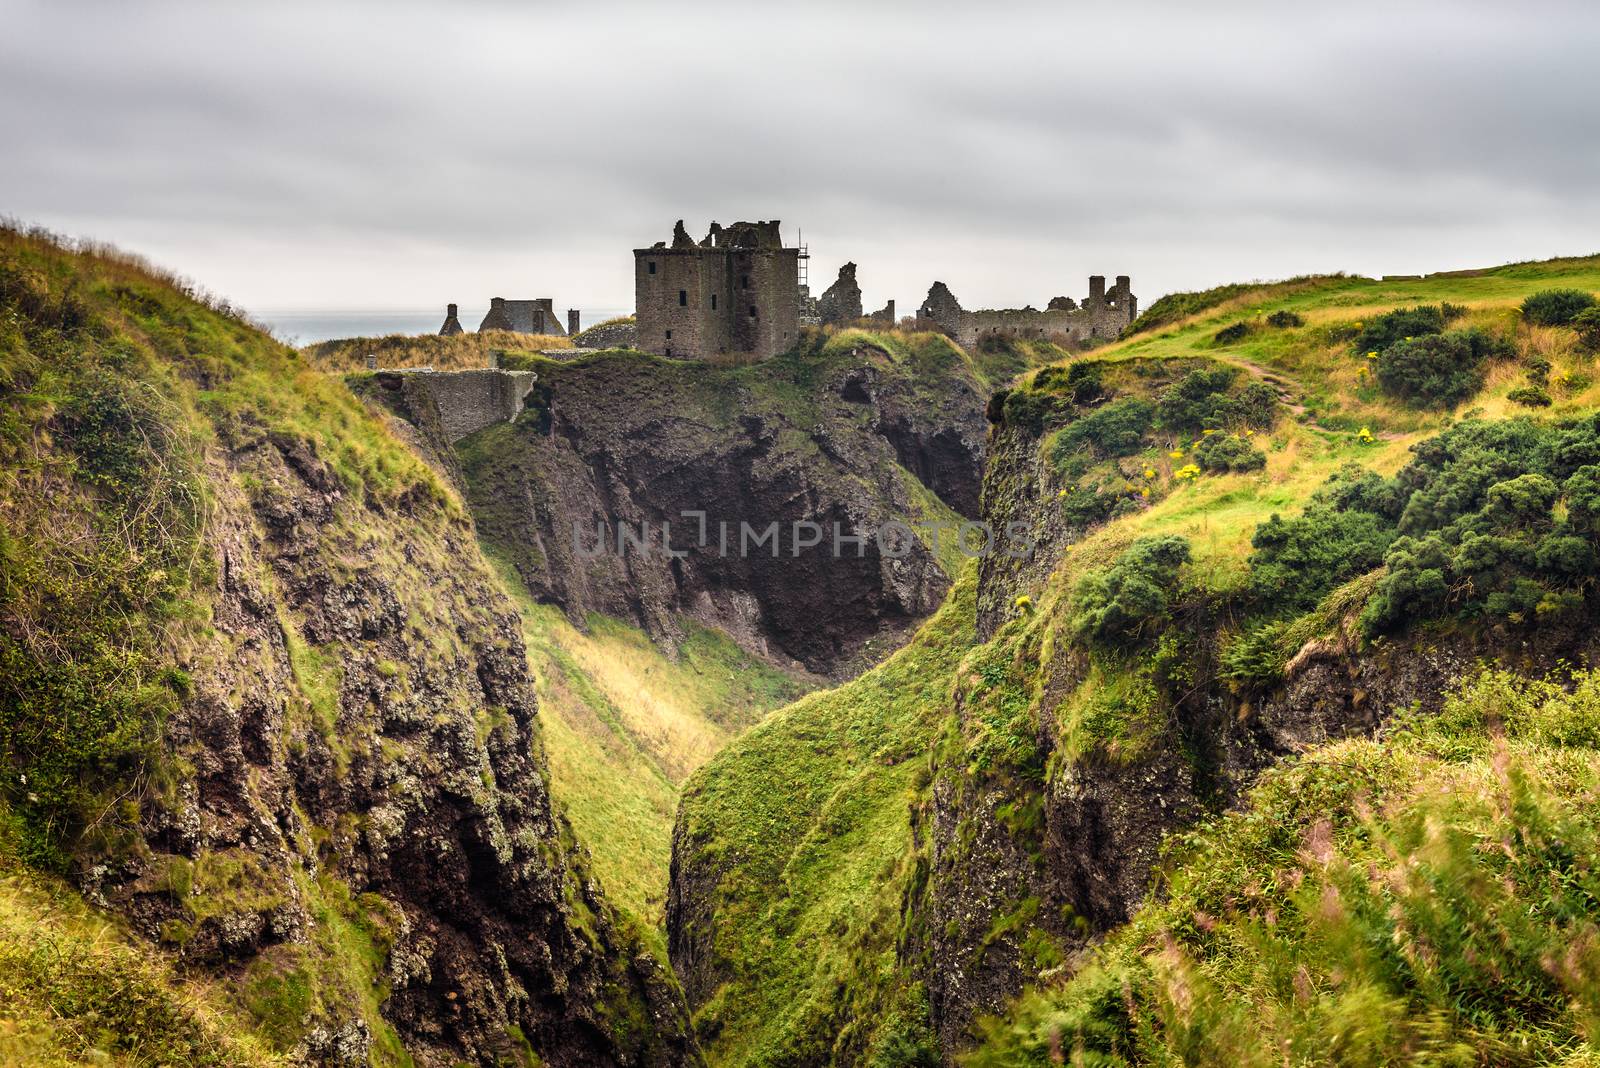 Dunnottar Castle, Scotland by nickfox